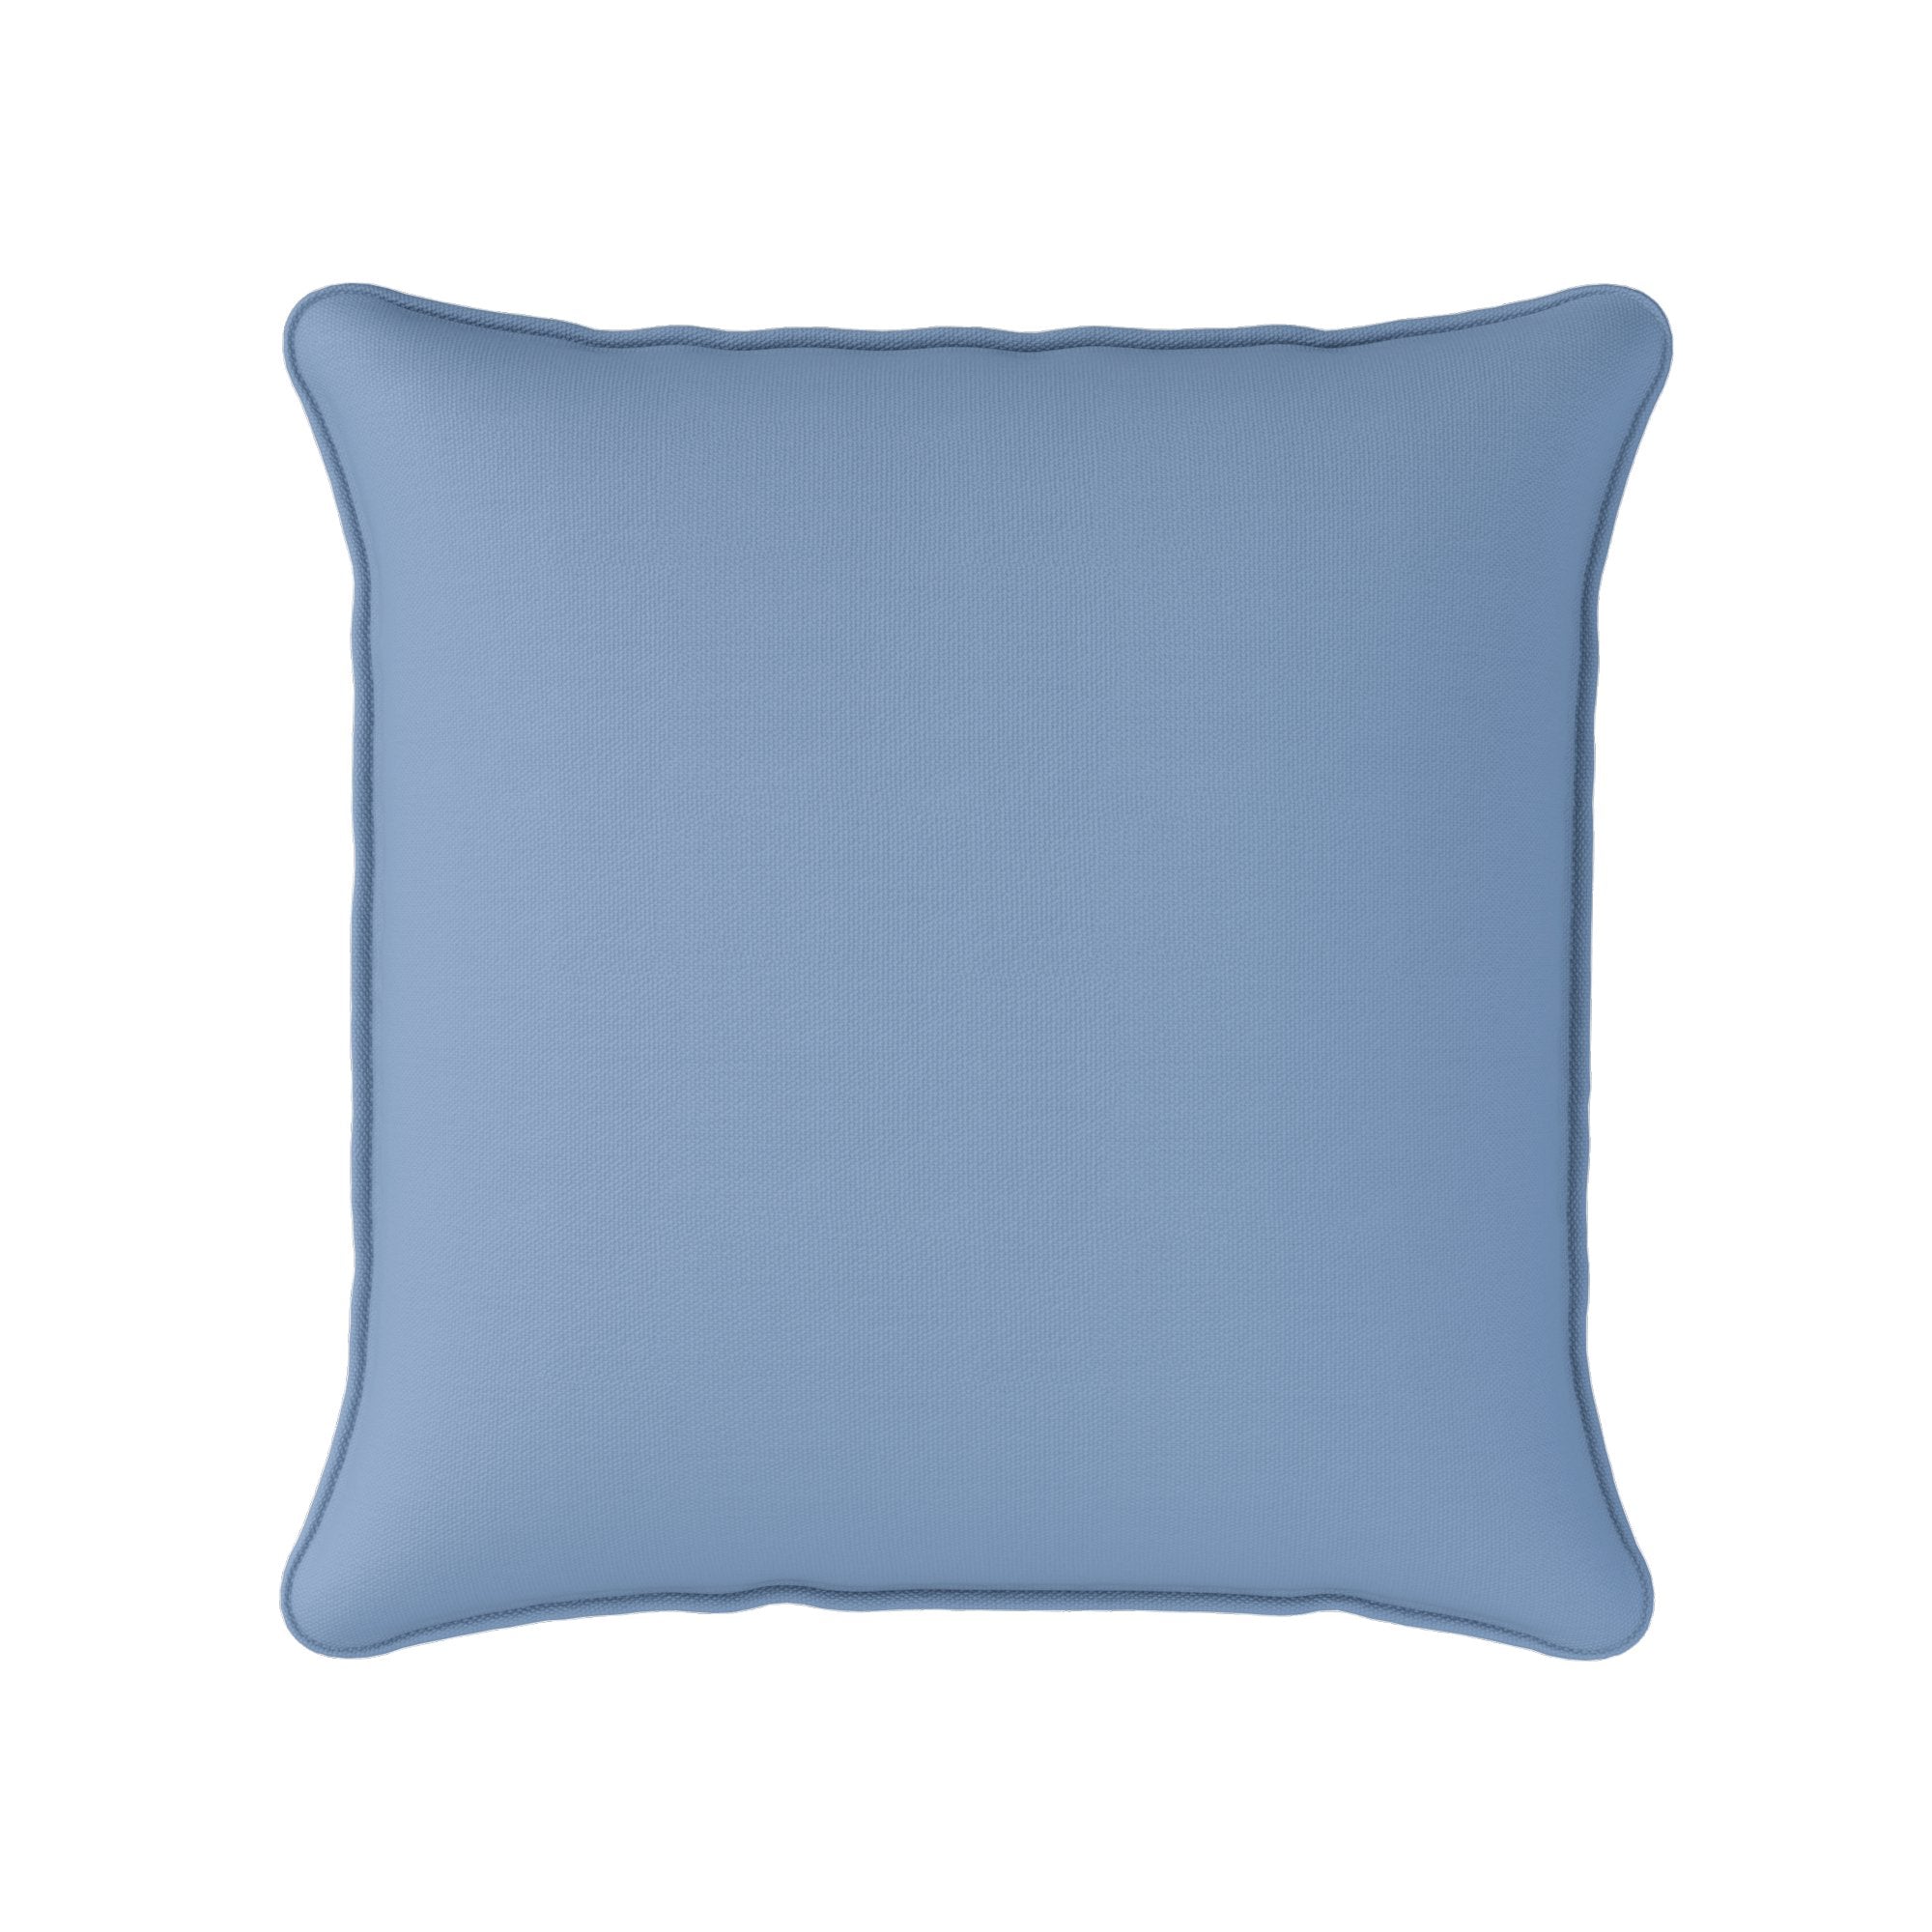 Perfectly Plain Cushion - Blues - Hydrangea Lane Home